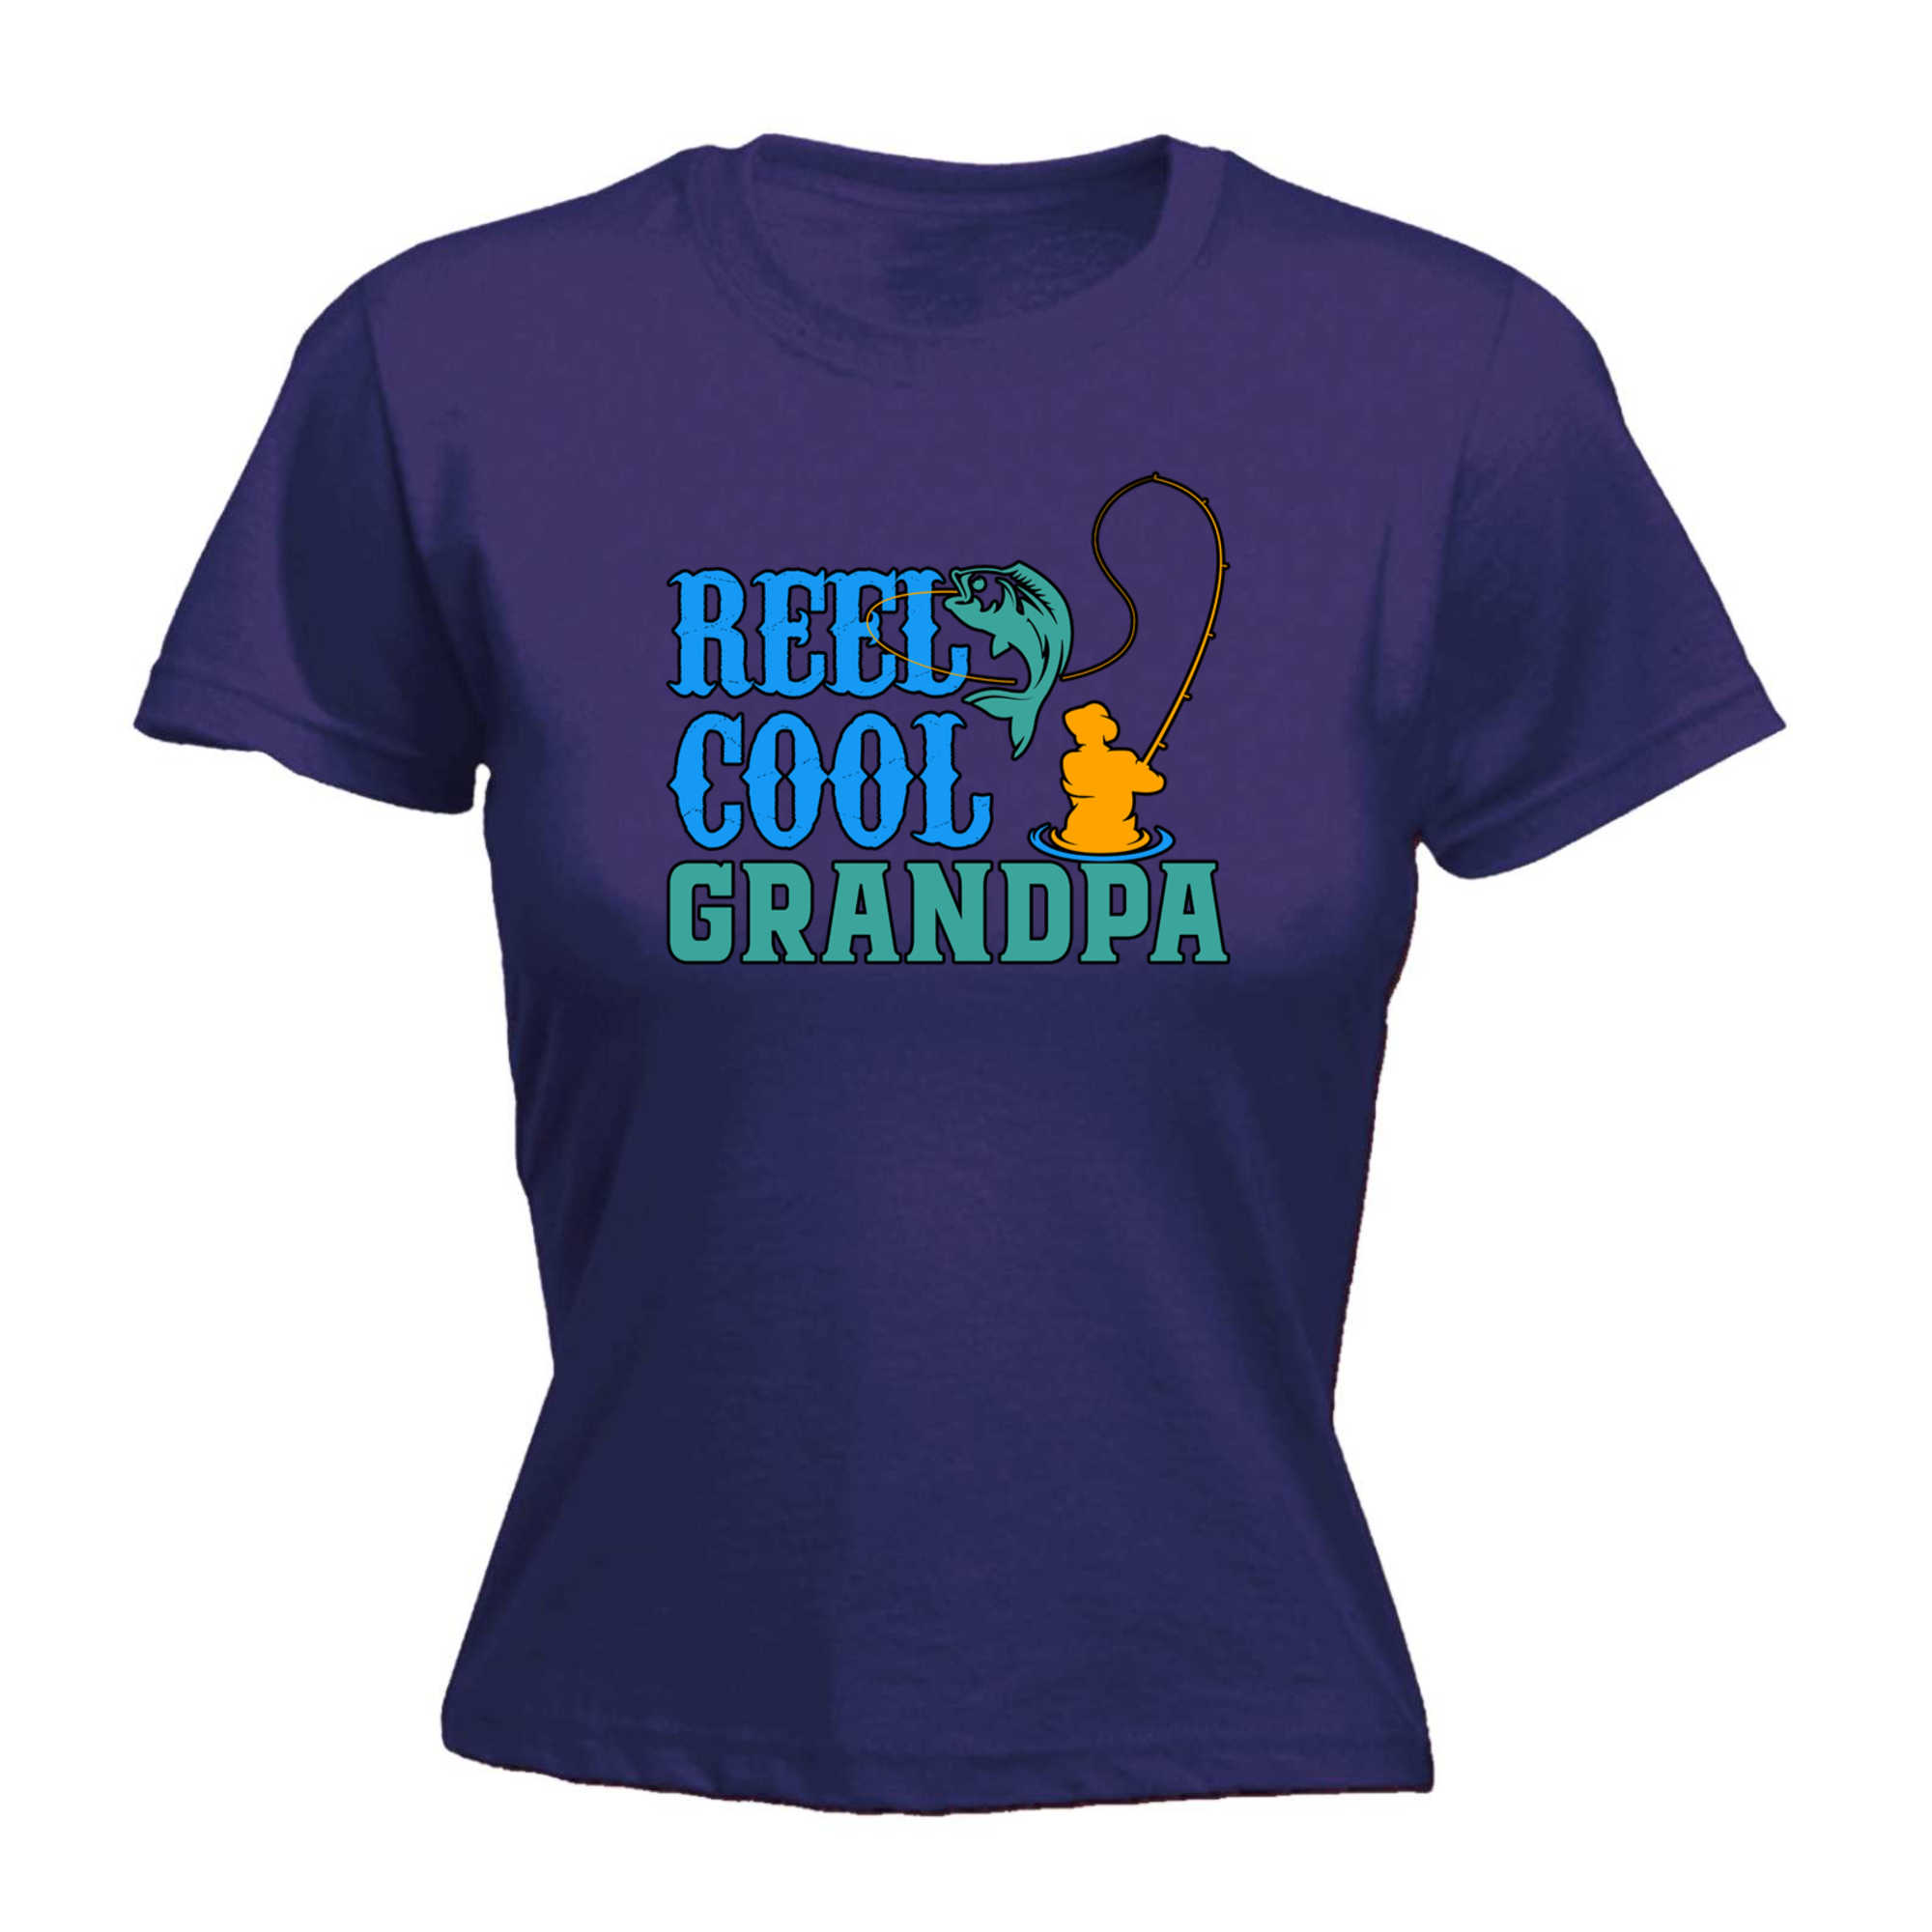 Reel Cool Grandpa T-Shirts for Sale